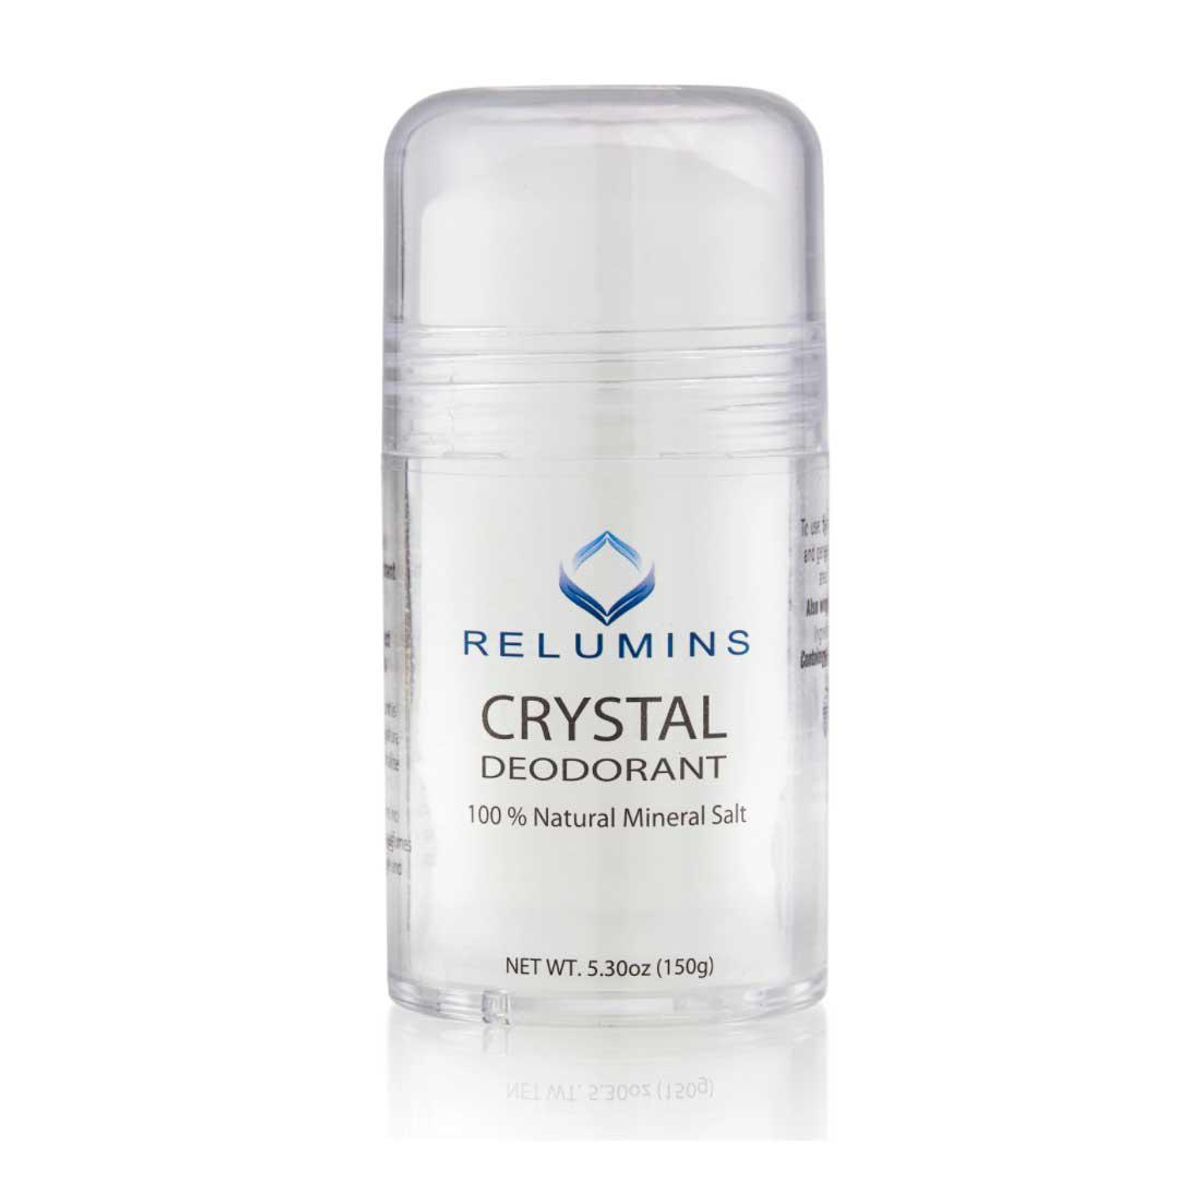 relumins natural mineral salt crystal deodorant